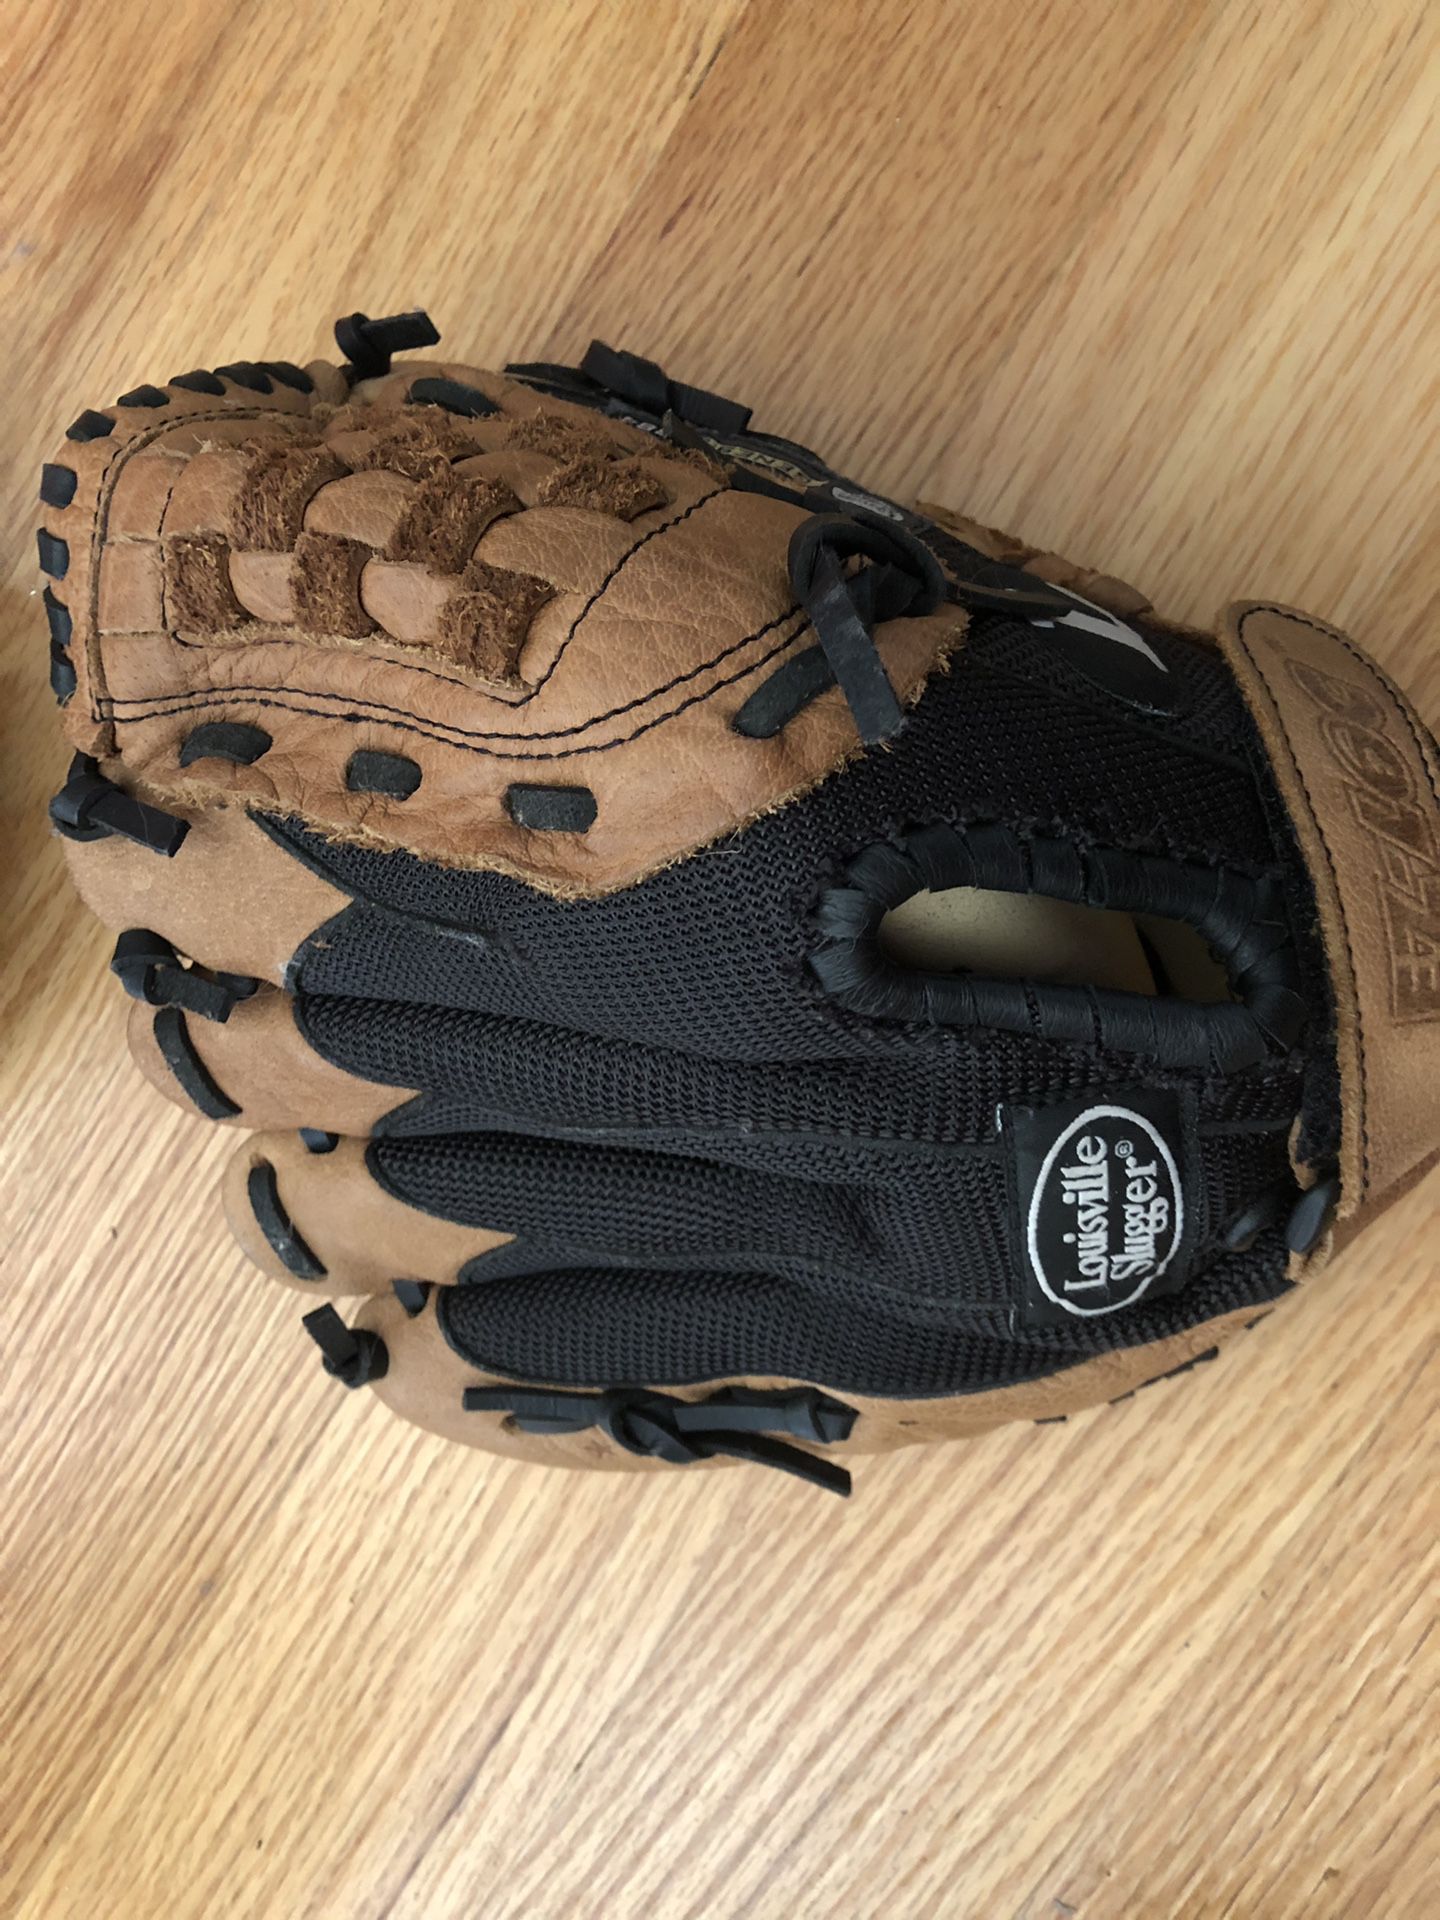 Baseball Glove, Louisville Slugger